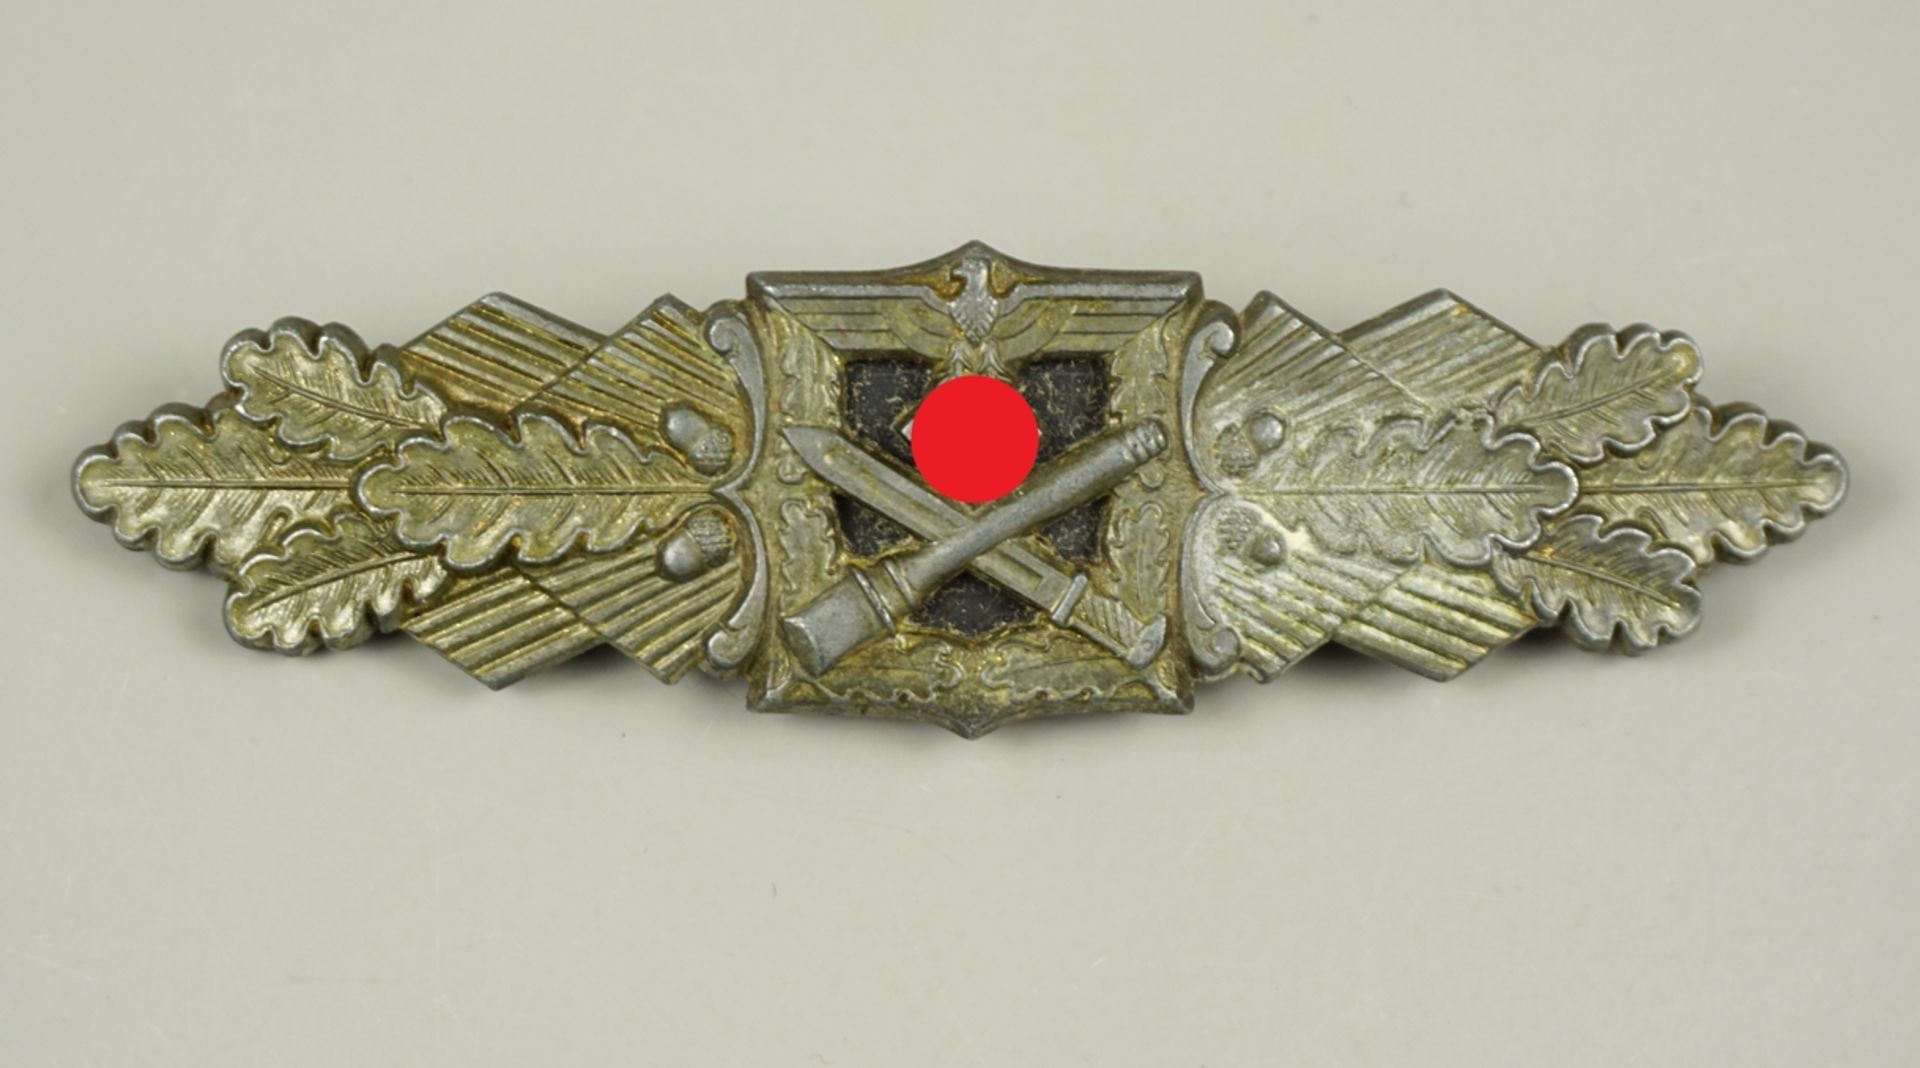 Nahkampfspange des Heeres in Bronze, 2.Weltkrieg